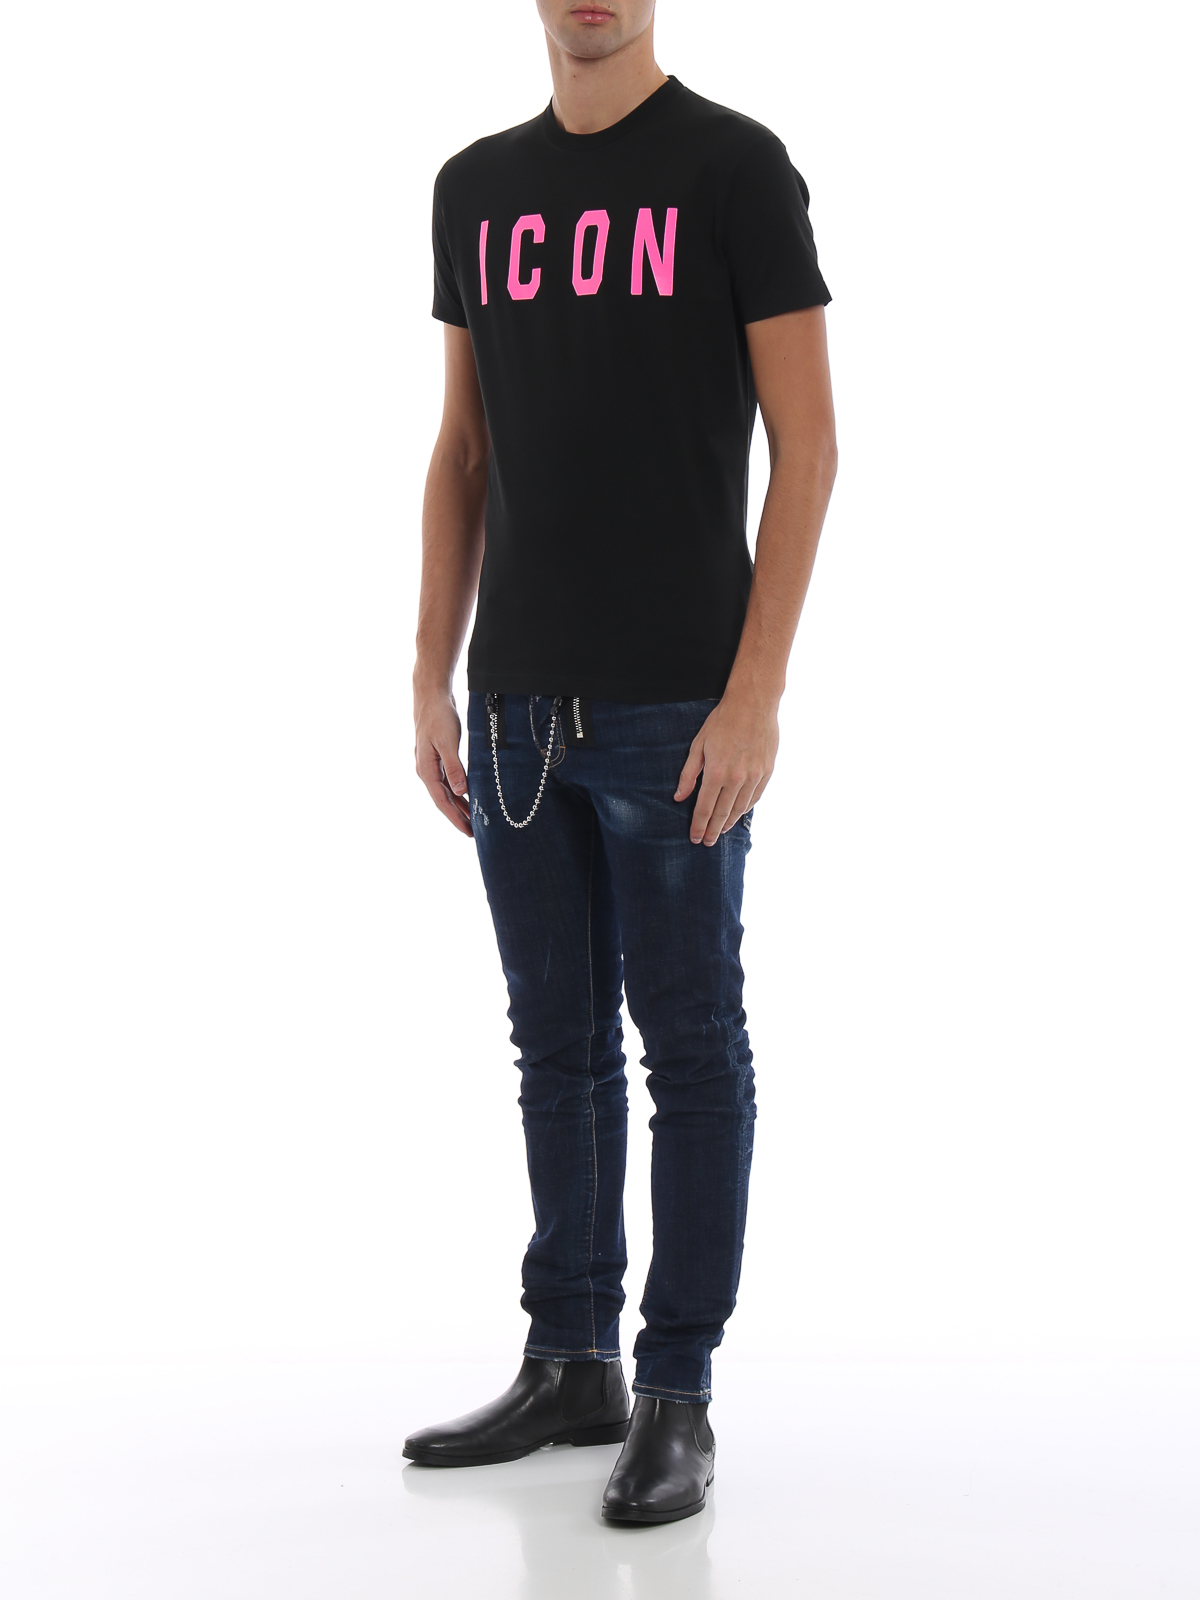 Sydney wholesale dsquared icon t shirt pink next online new